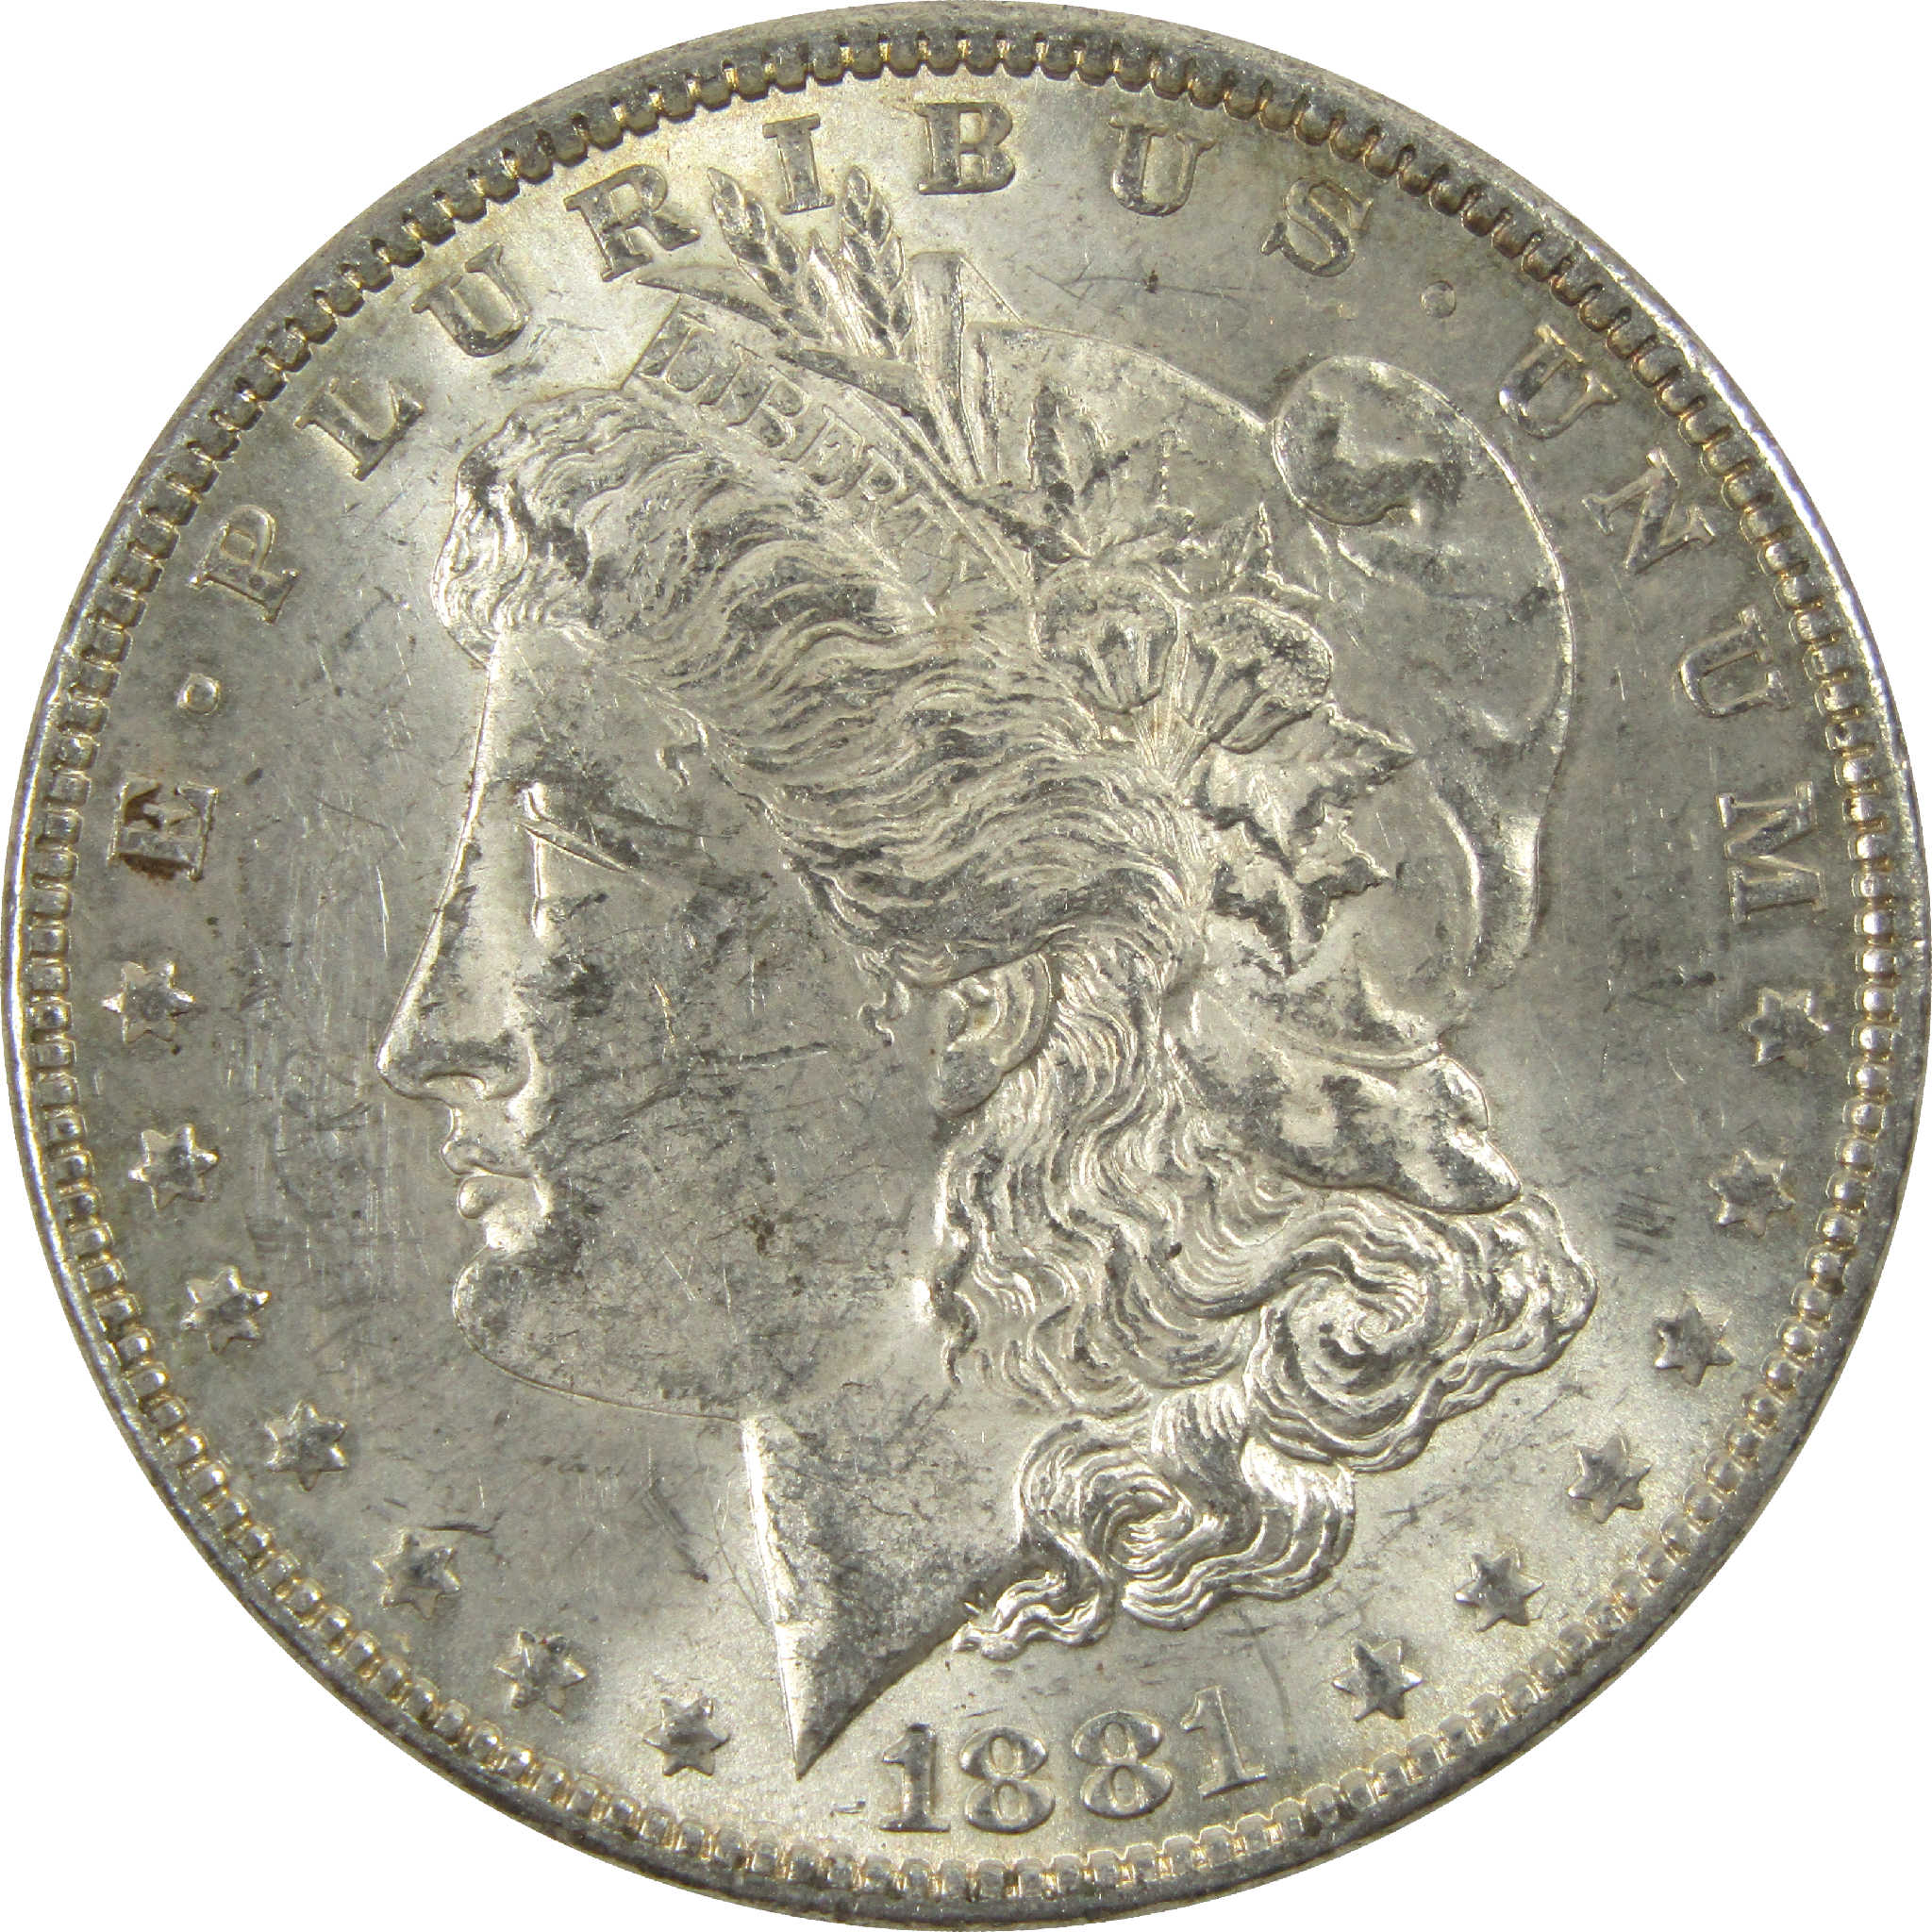 1881 Morgan Dollar CH AU Choice About Uncirculated Silver $1 Coin - Morgan coin - Morgan silver dollar - Morgan silver dollar for sale - Profile Coins &amp; Collectibles